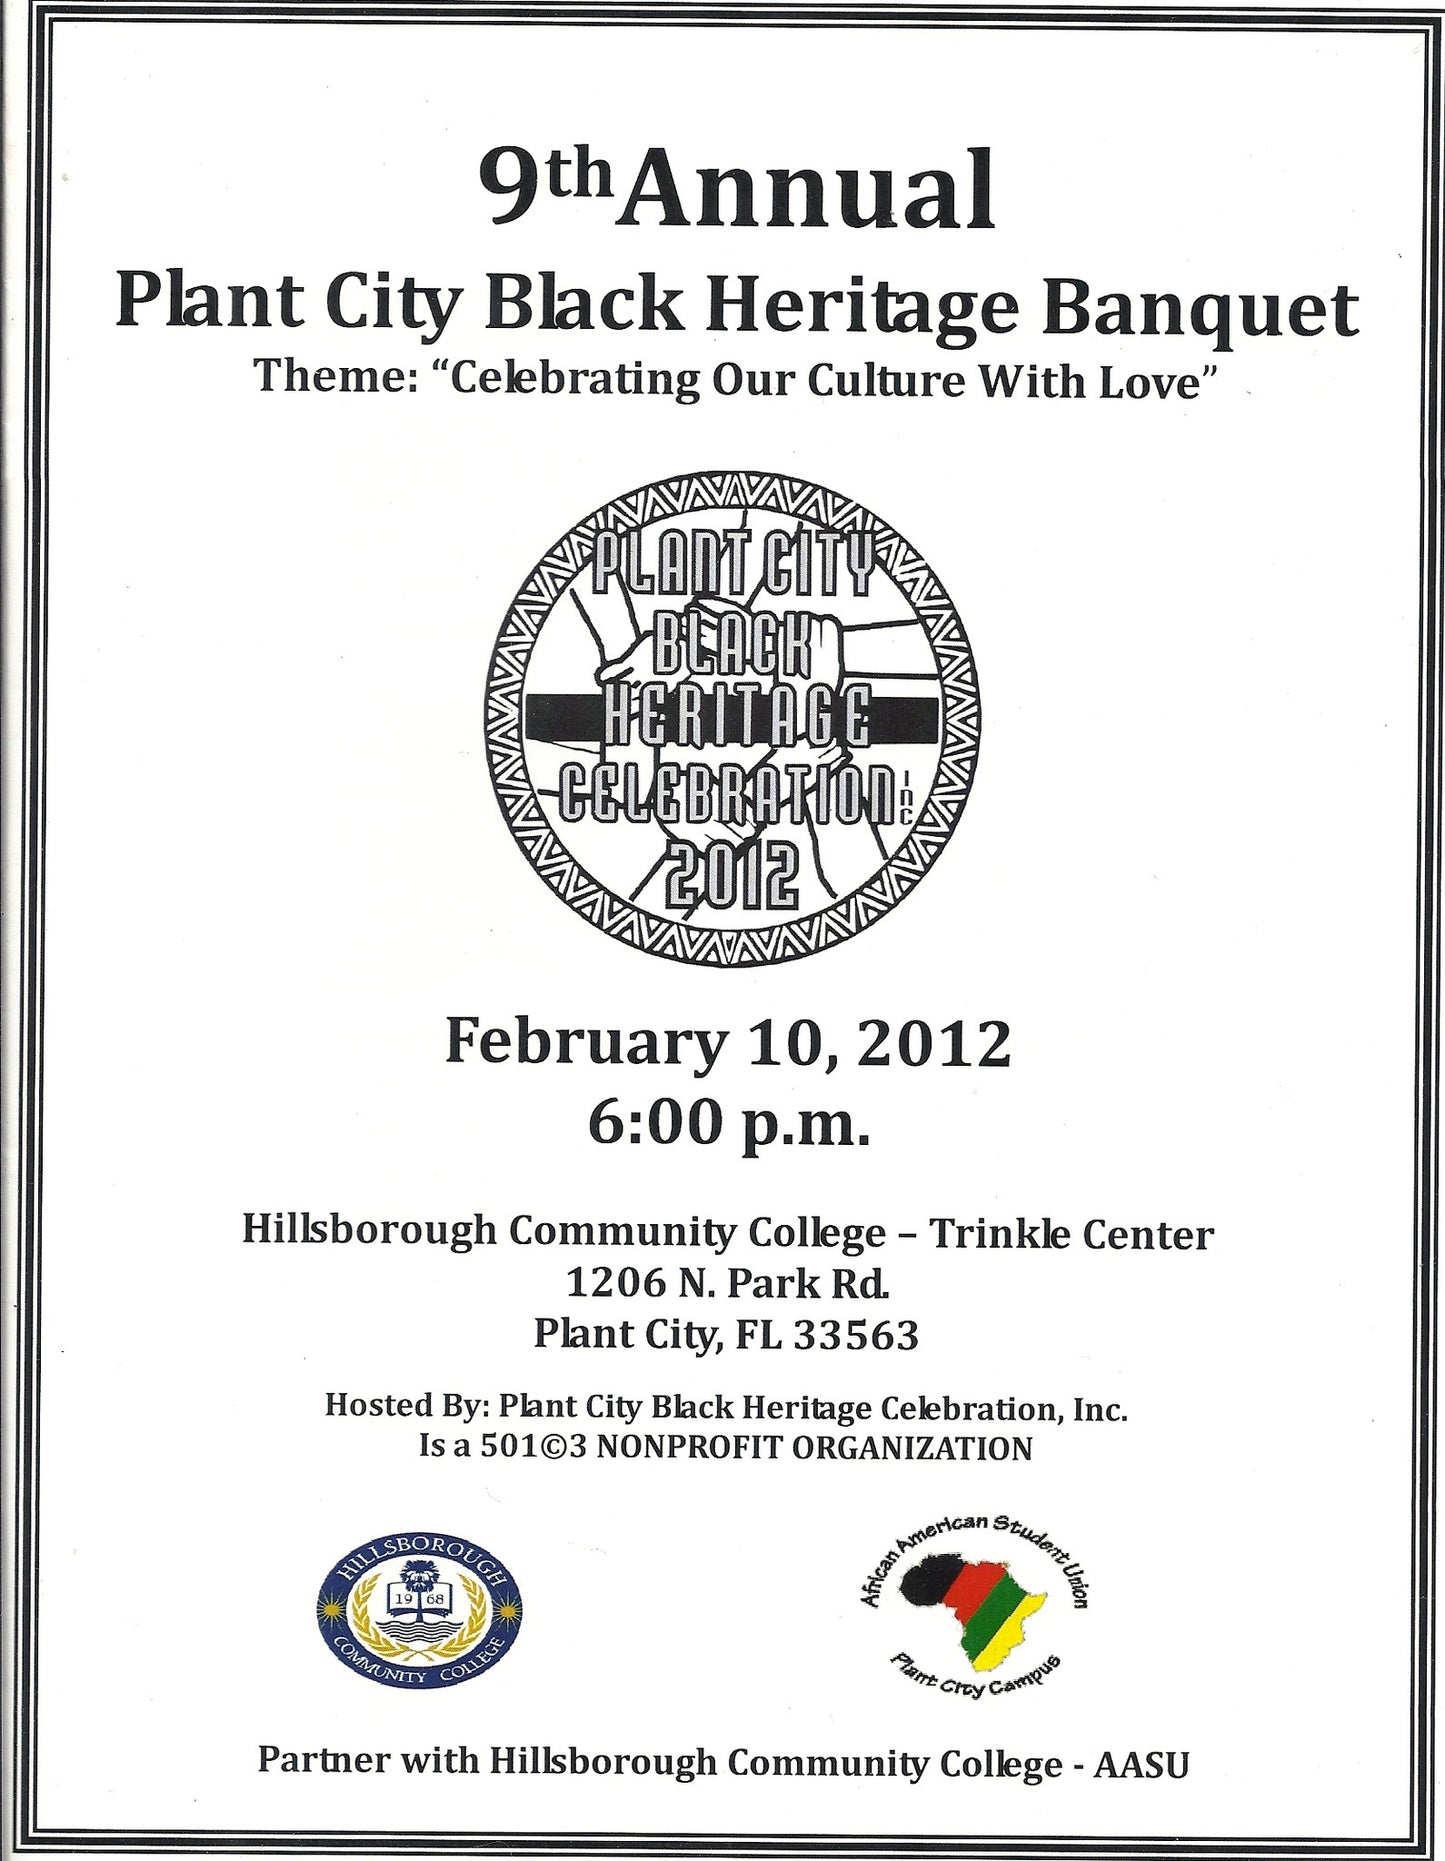 02 10 2012 Plant City Black Heritage Banquet - 9th